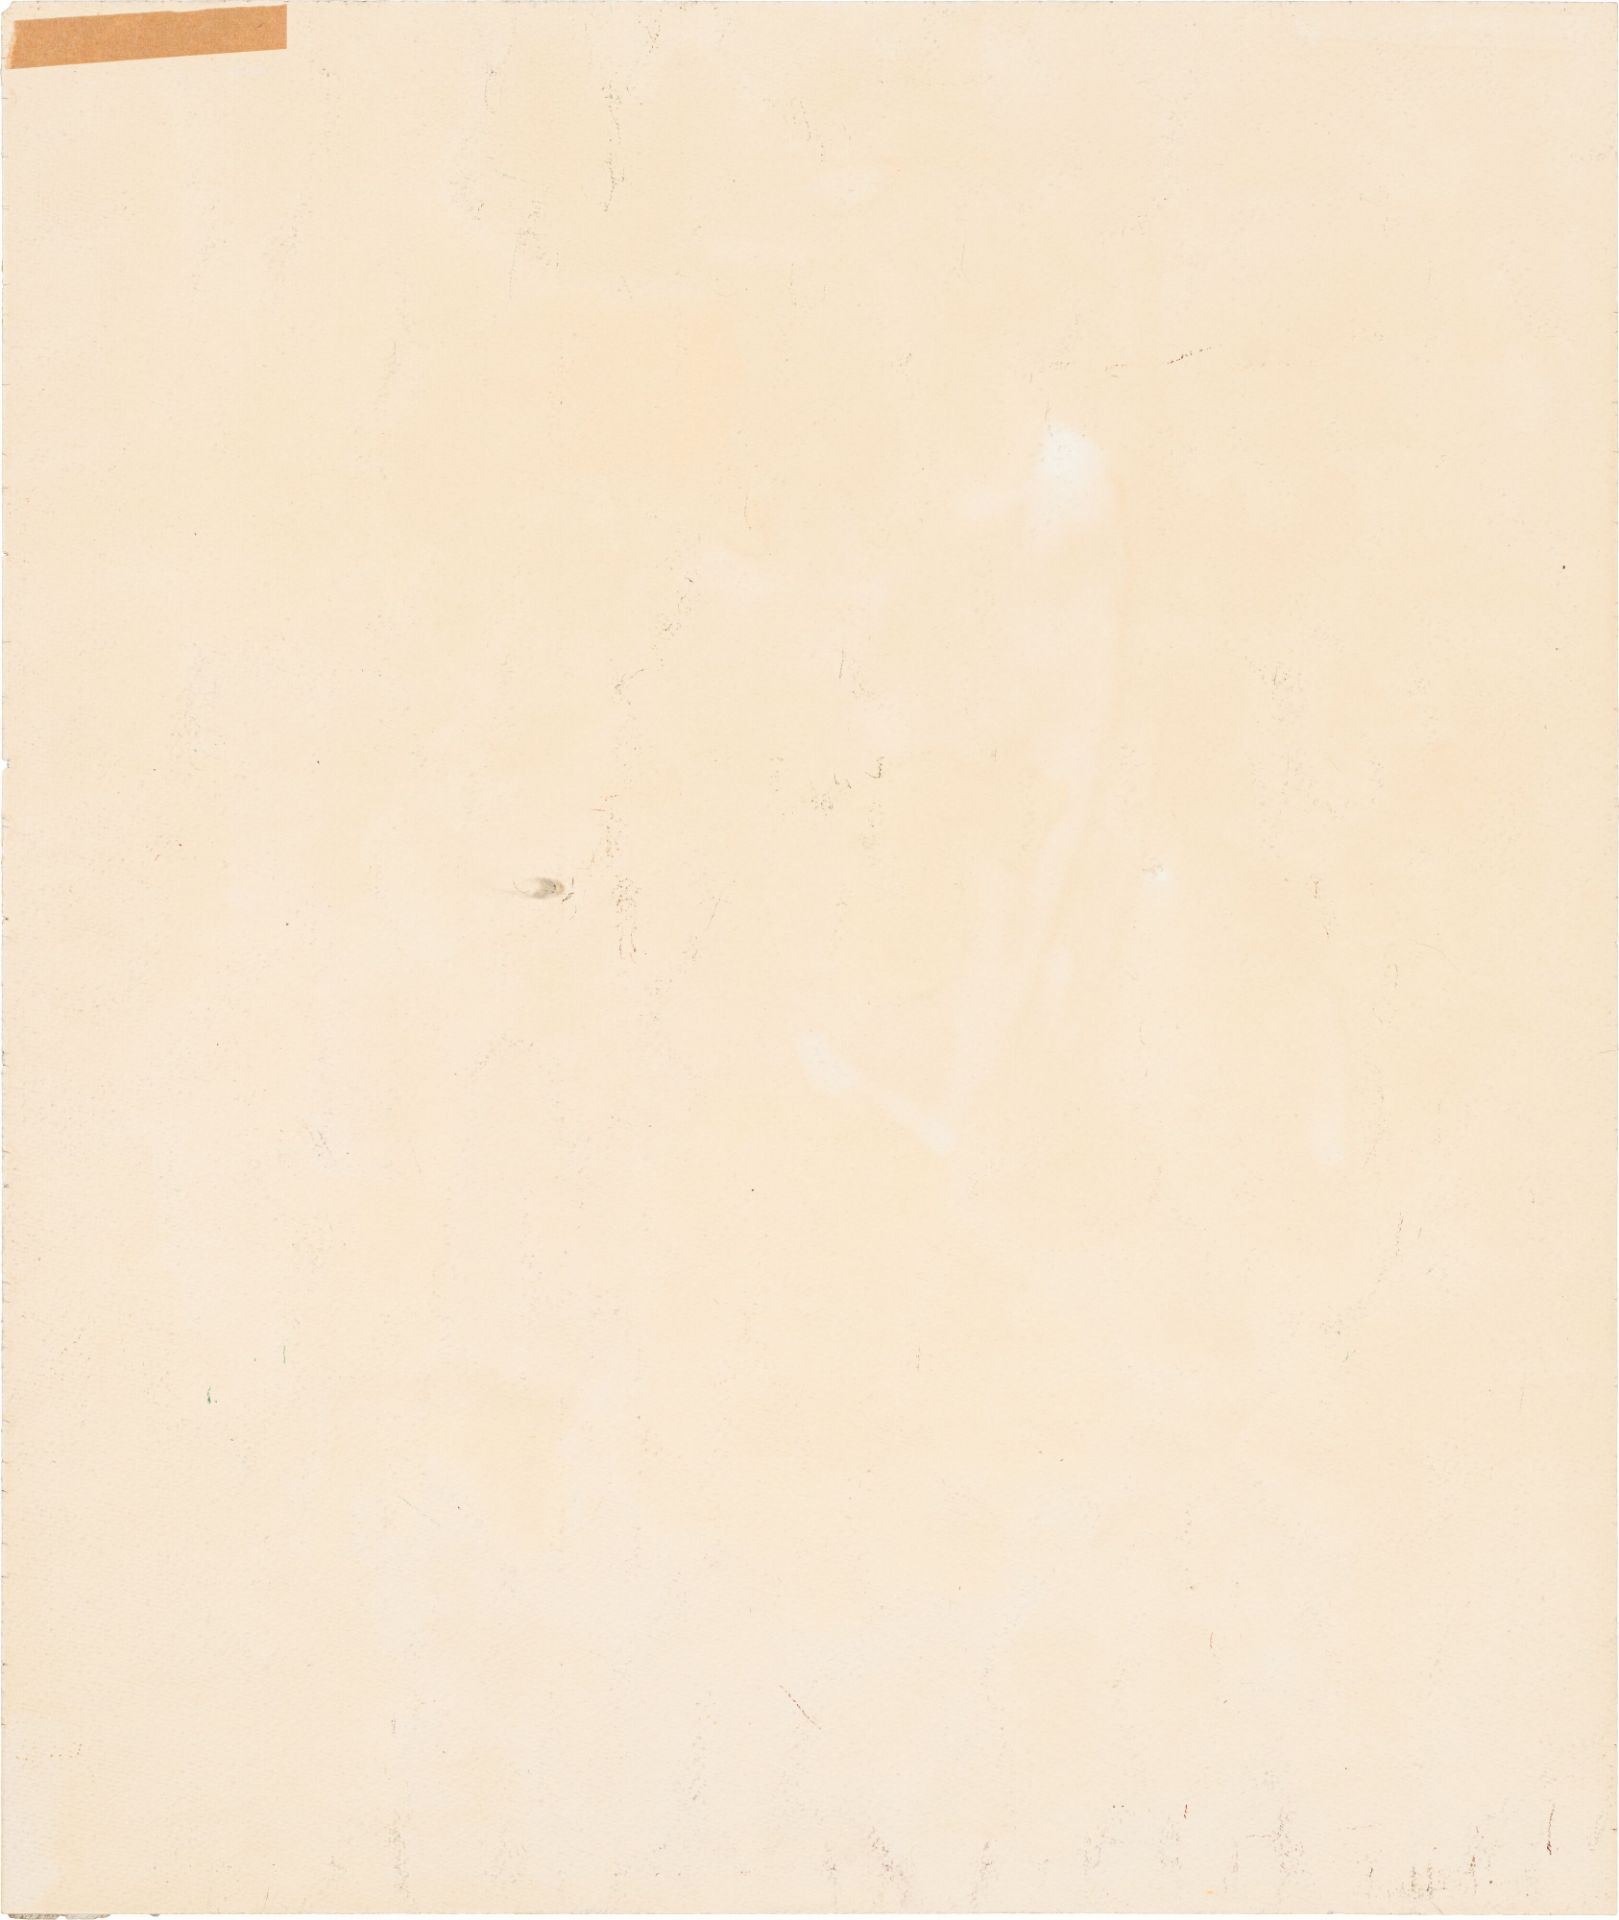 Wilhelm Nicolaus PrachenskyFlowers1951tempera on paper; framed42.5 x 36 cm (cut-out), 44.5 x 37.5 cm - Image 3 of 3